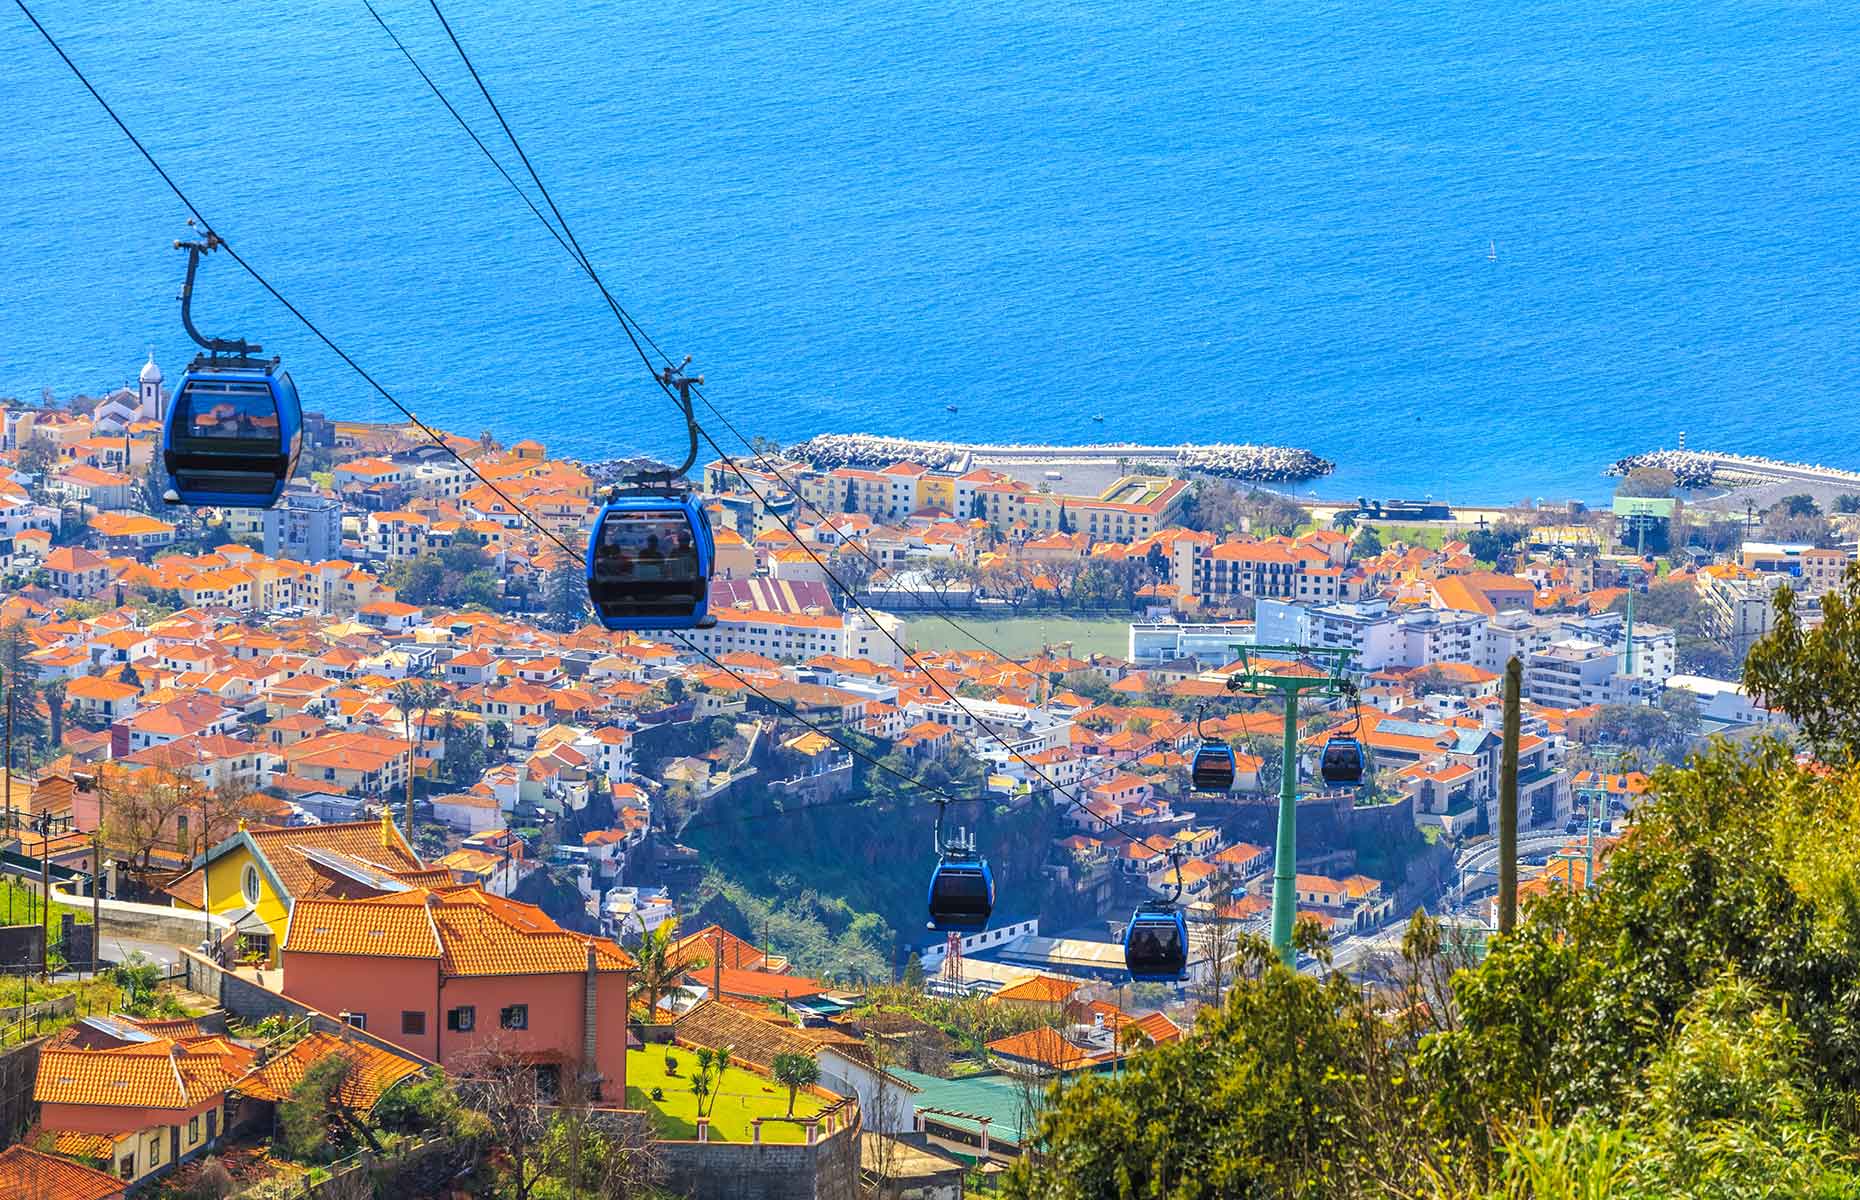 Funchal cable cars (Image: Cristian Mircea Balate/Shutterstock)